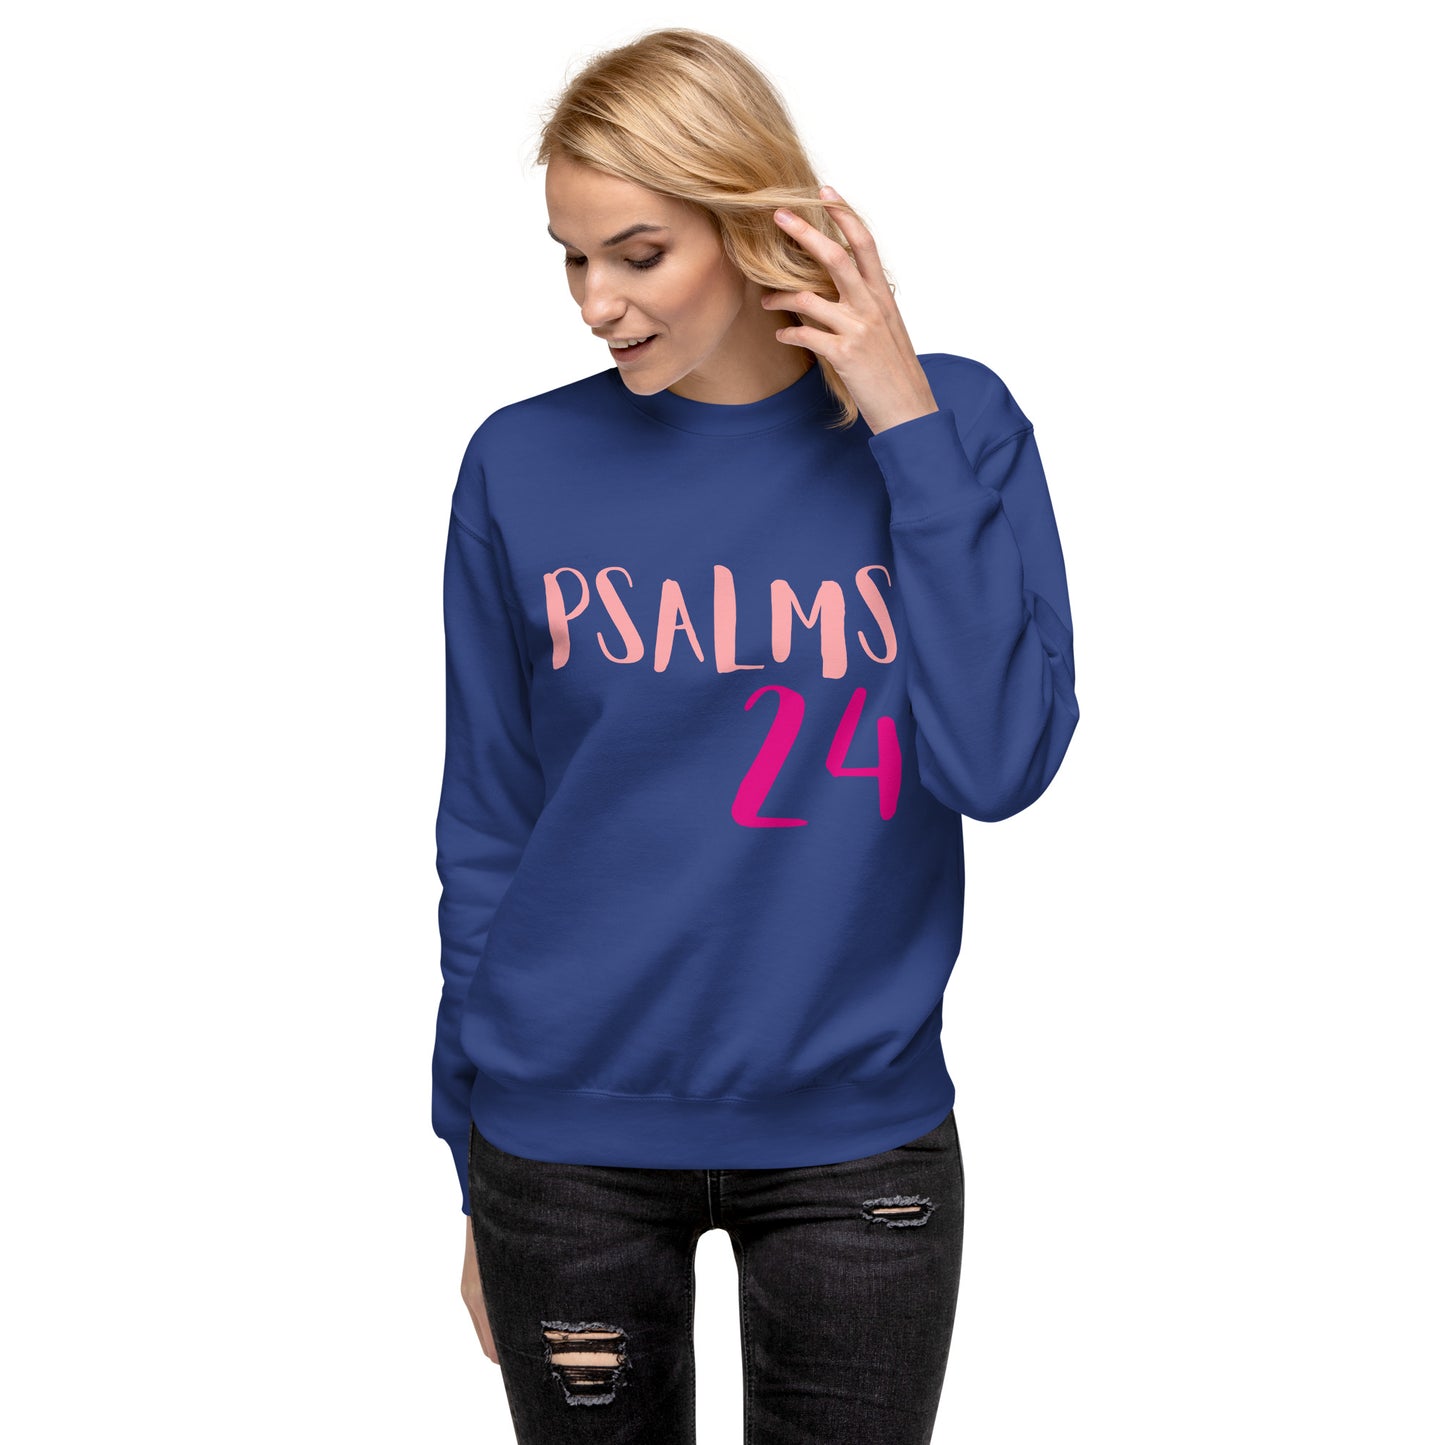 ‘Psalms 24’ Unisex Premium Sweatshirt